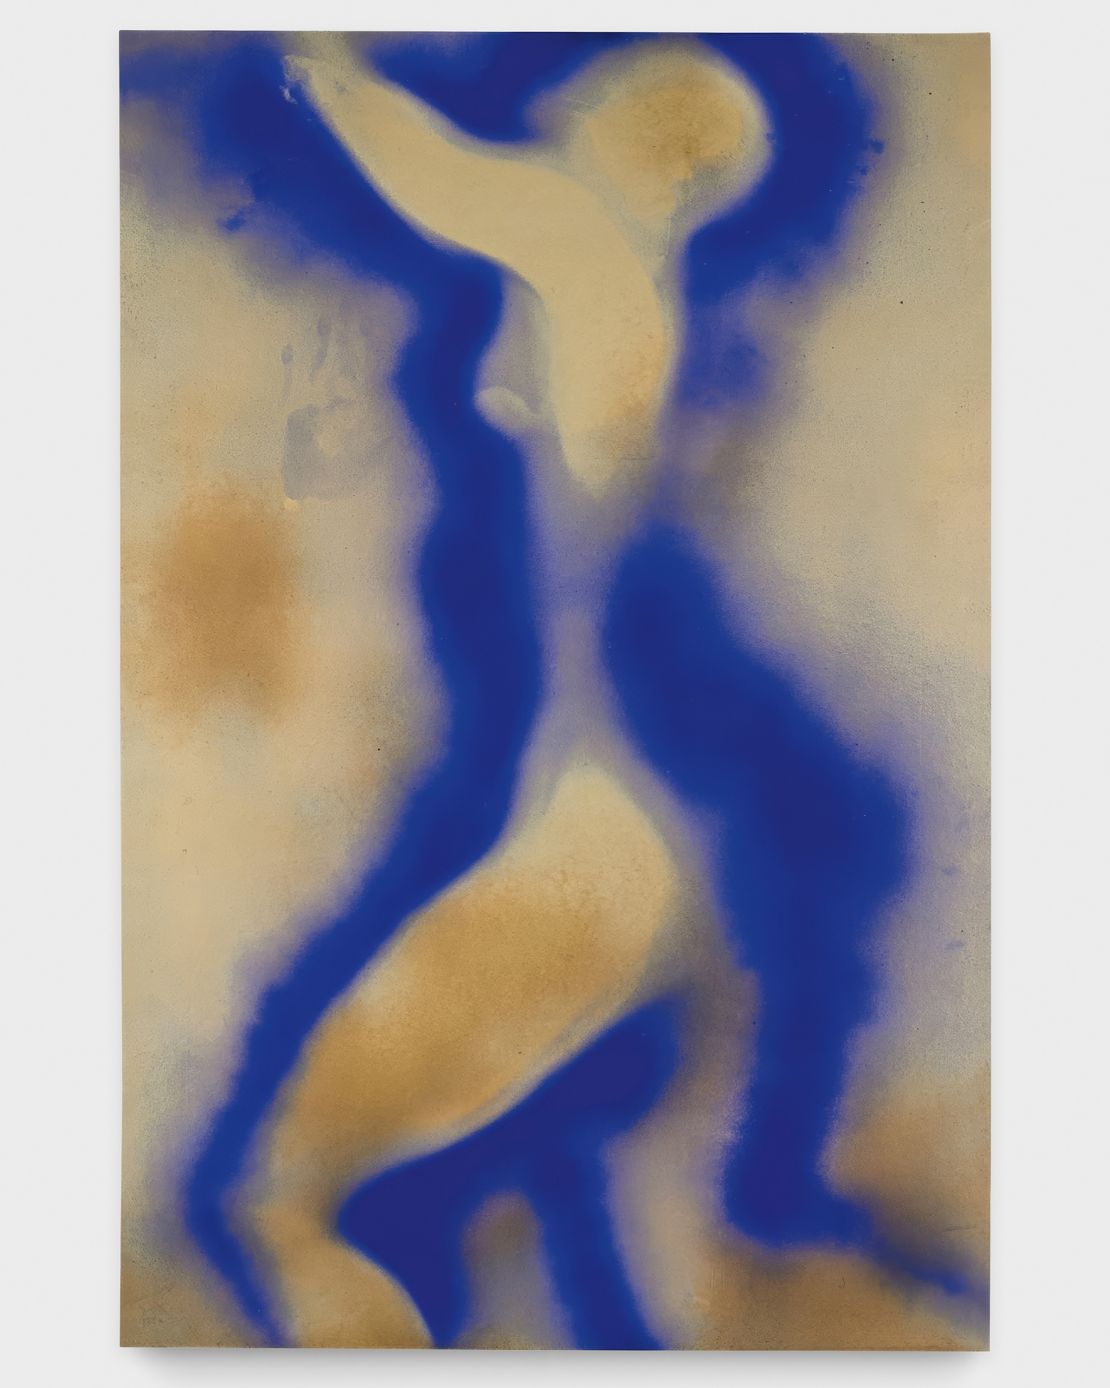 Klein's "Anthropométries" series explored the presence of bodies as paintings.